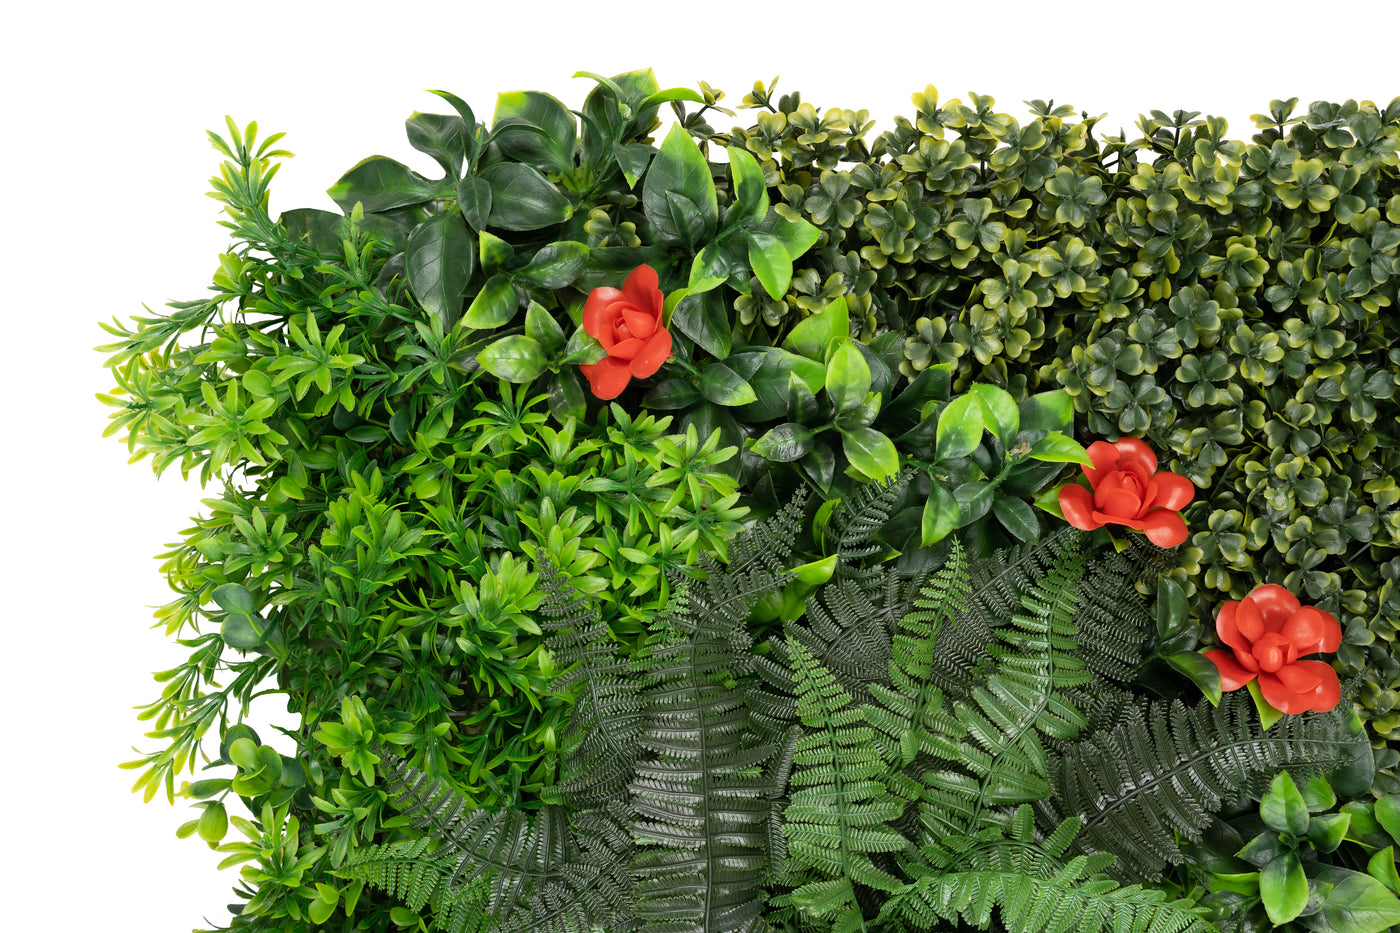 Gradina verticala din plante artificiale 1mp model design V47 pentru interior sau exterior